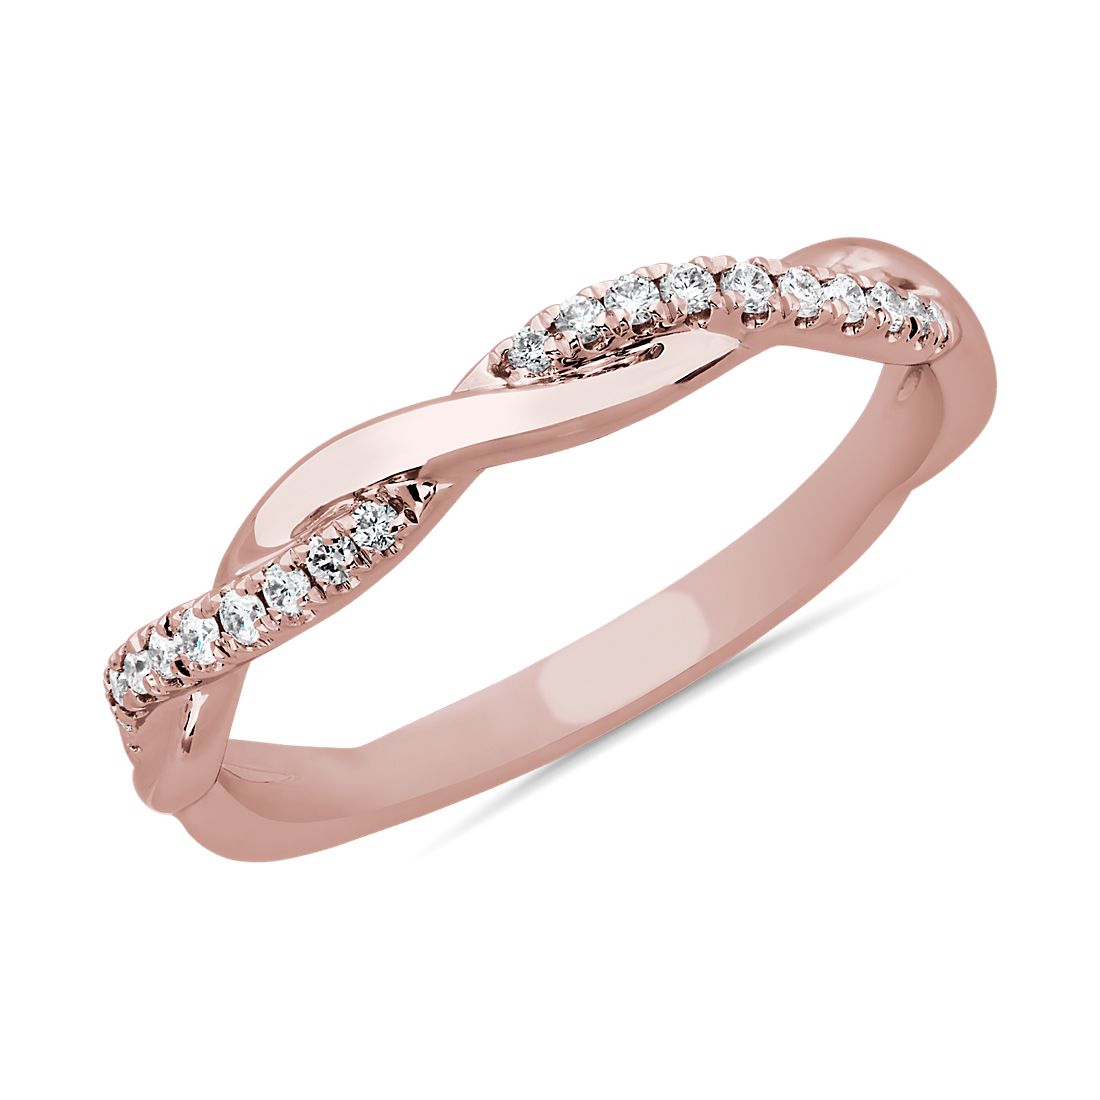 Petite Twist Diamond Anniversary Ring in 18k Rose Gold (0.09 ct. tw.)